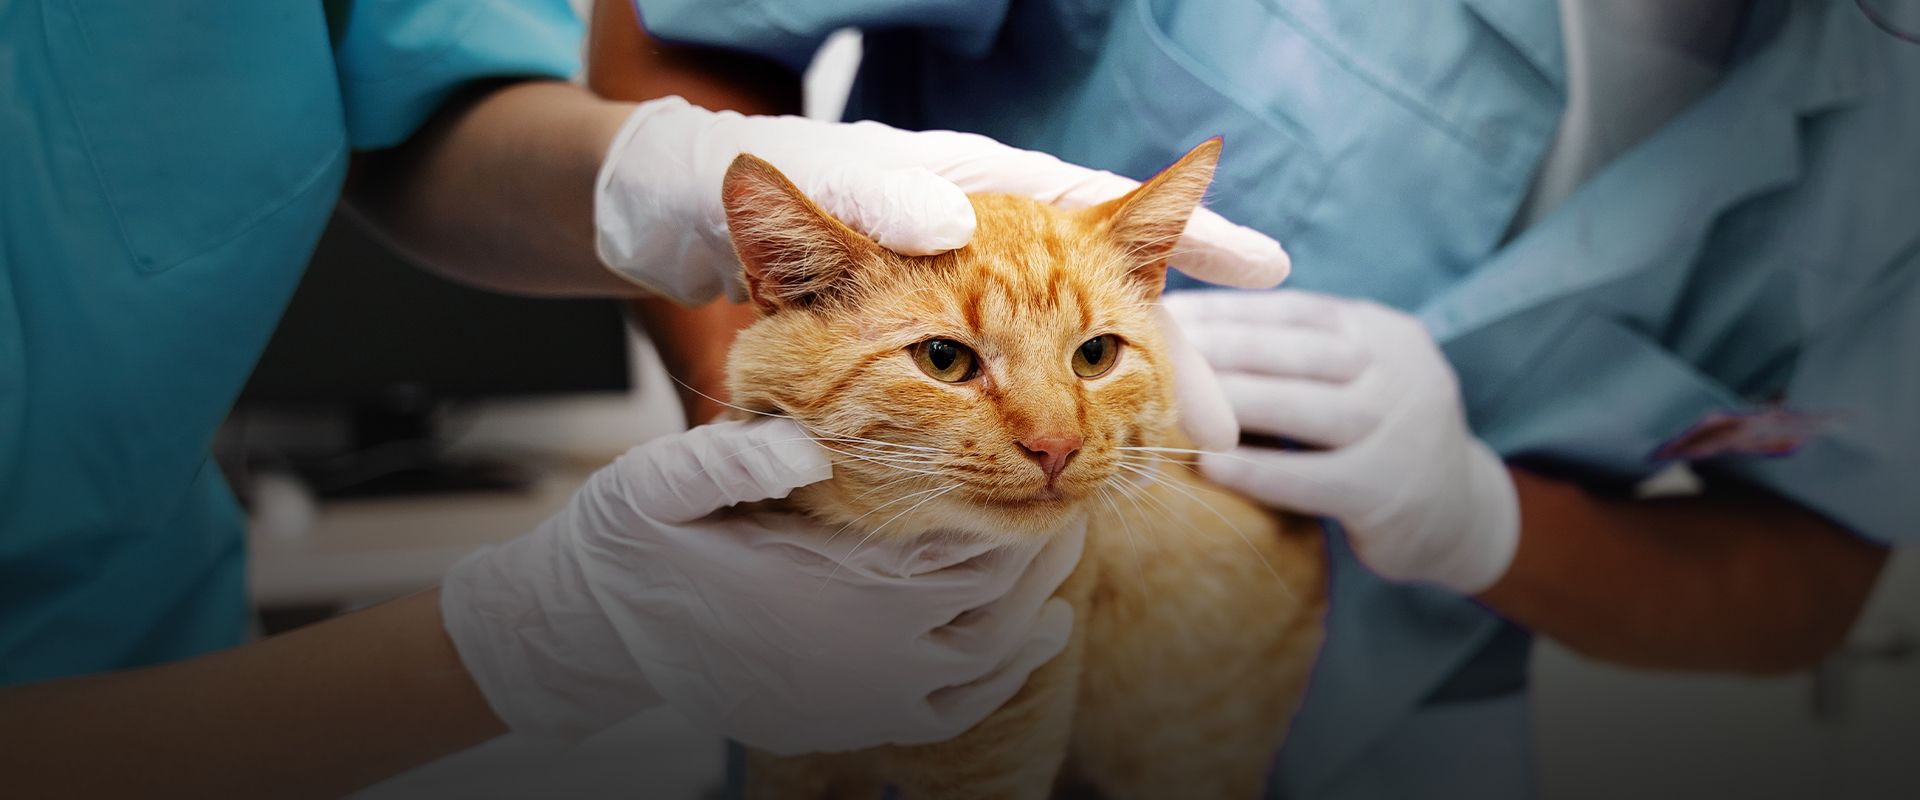 veterinarians checking an orange cat